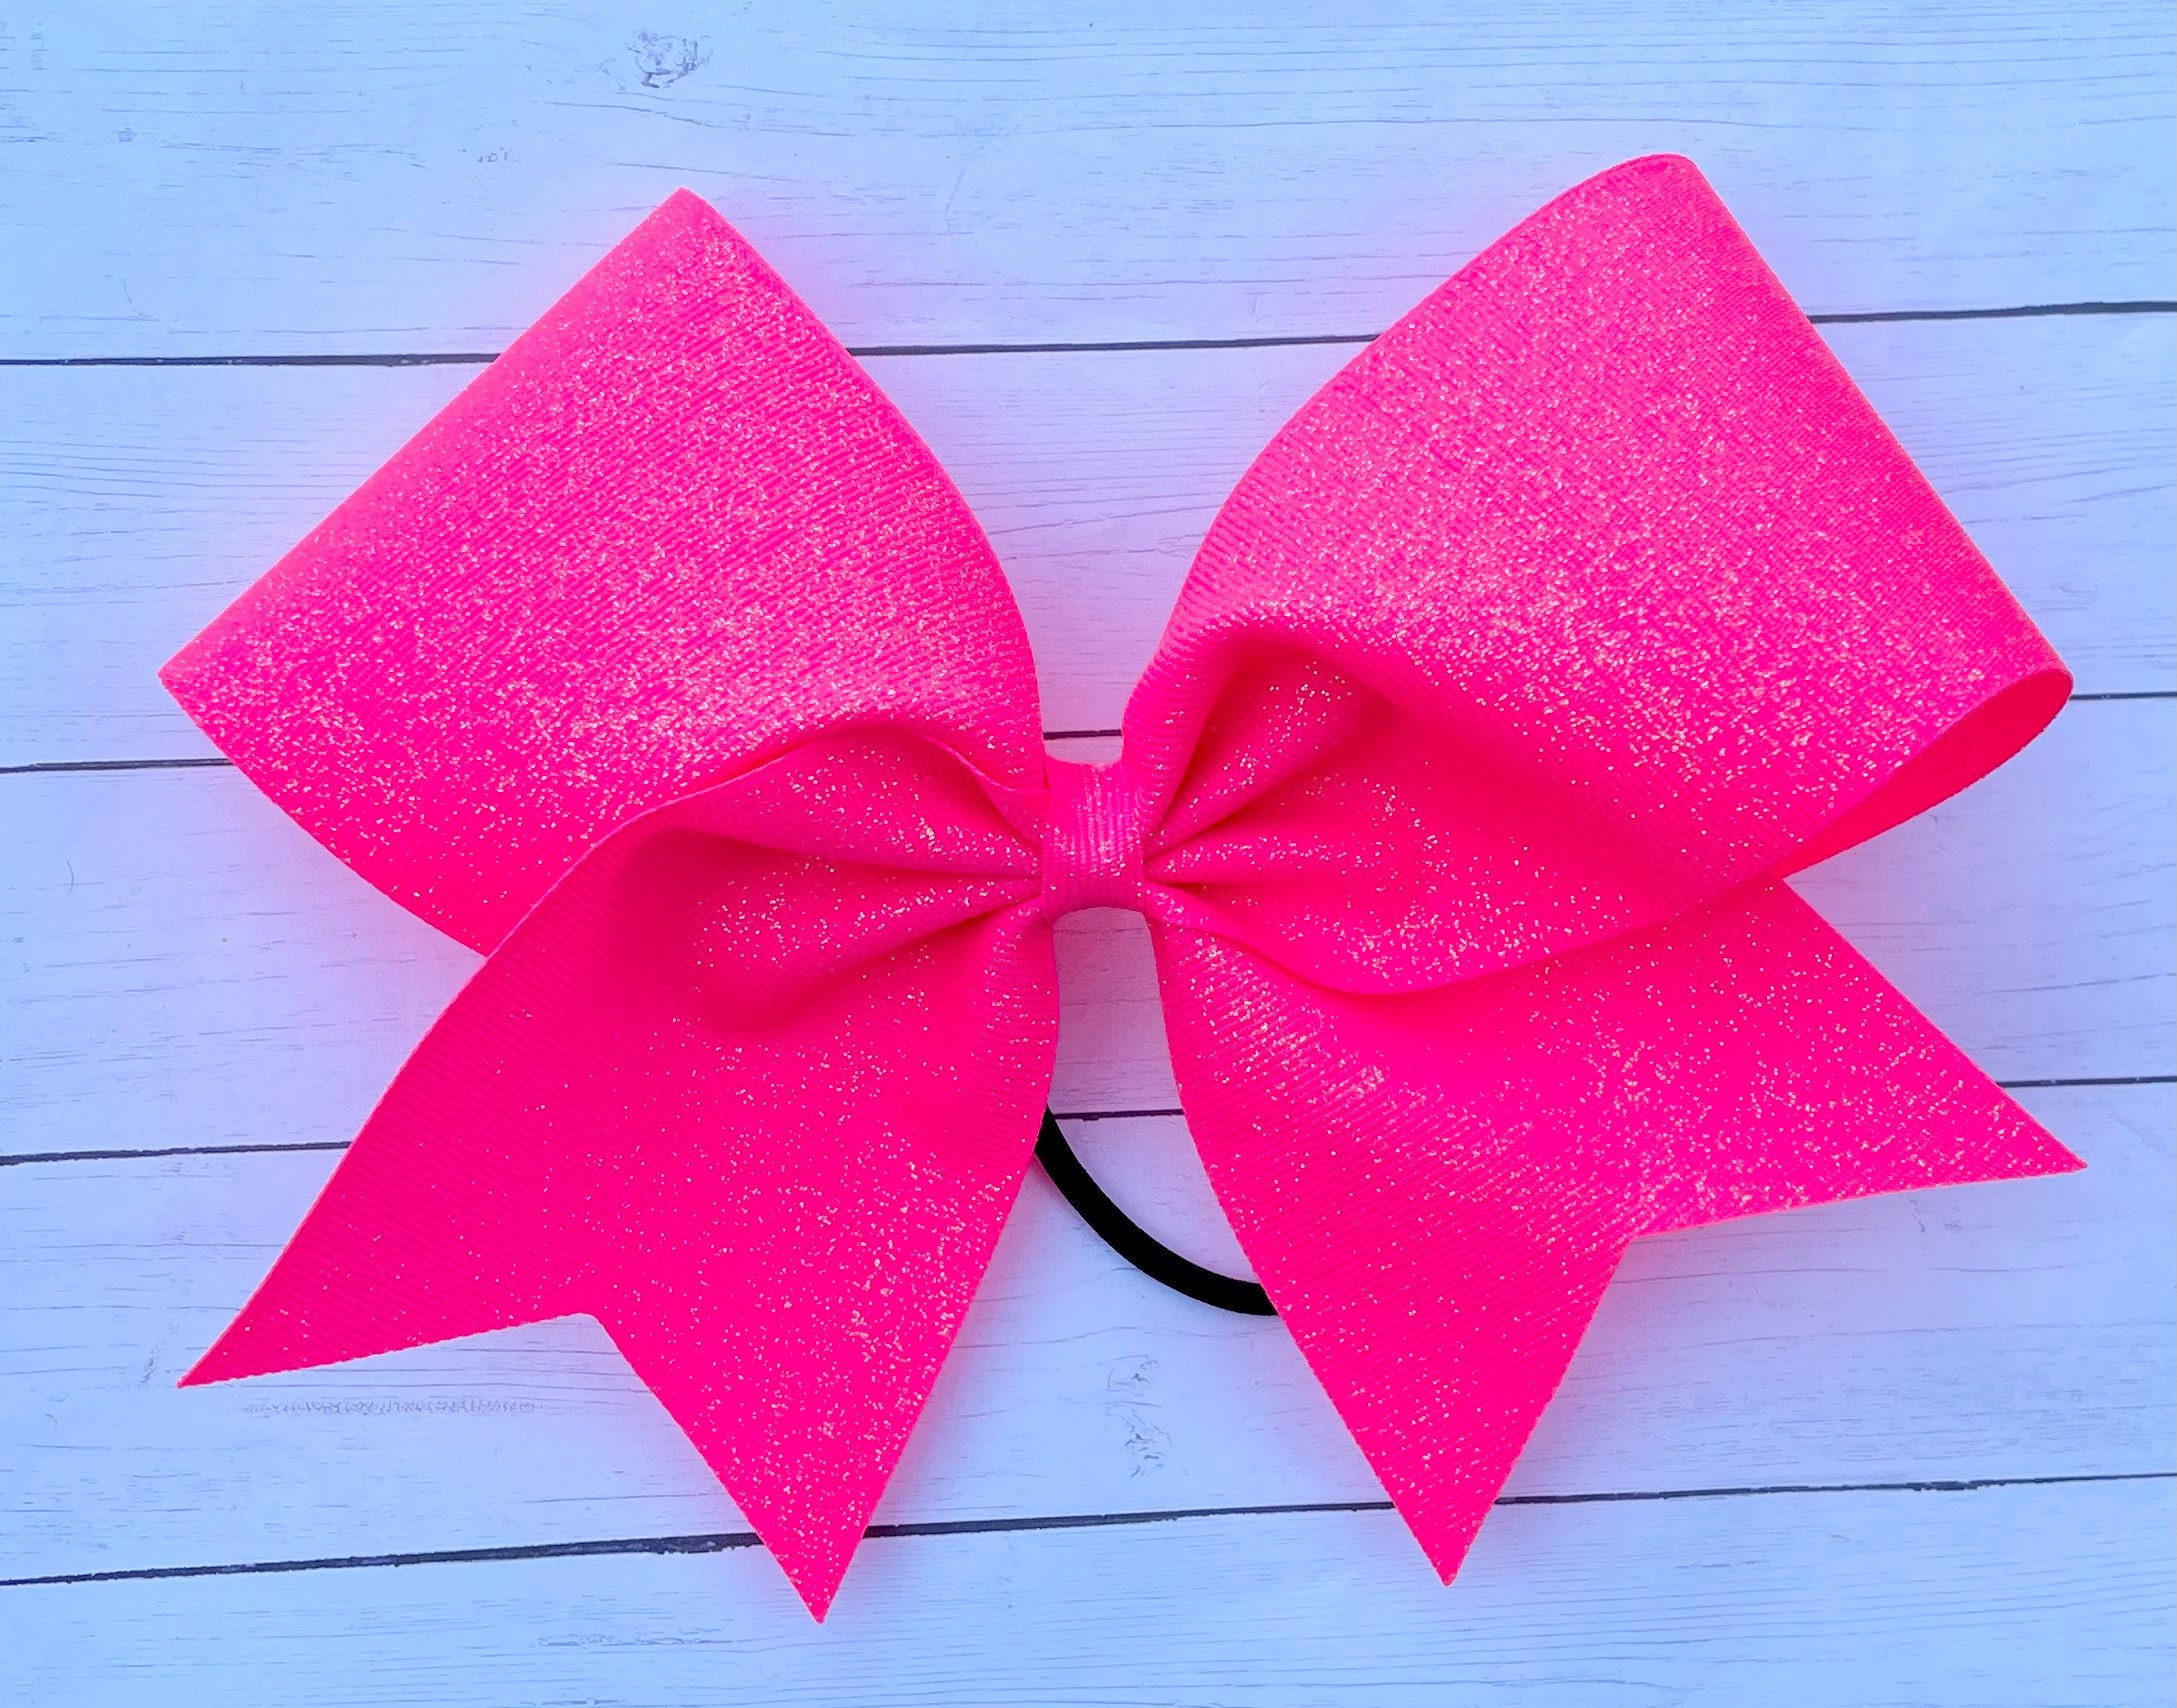 Full Rhinestone Cheer Bow - Shocking/Hot Pink - Chixx Hair Bows